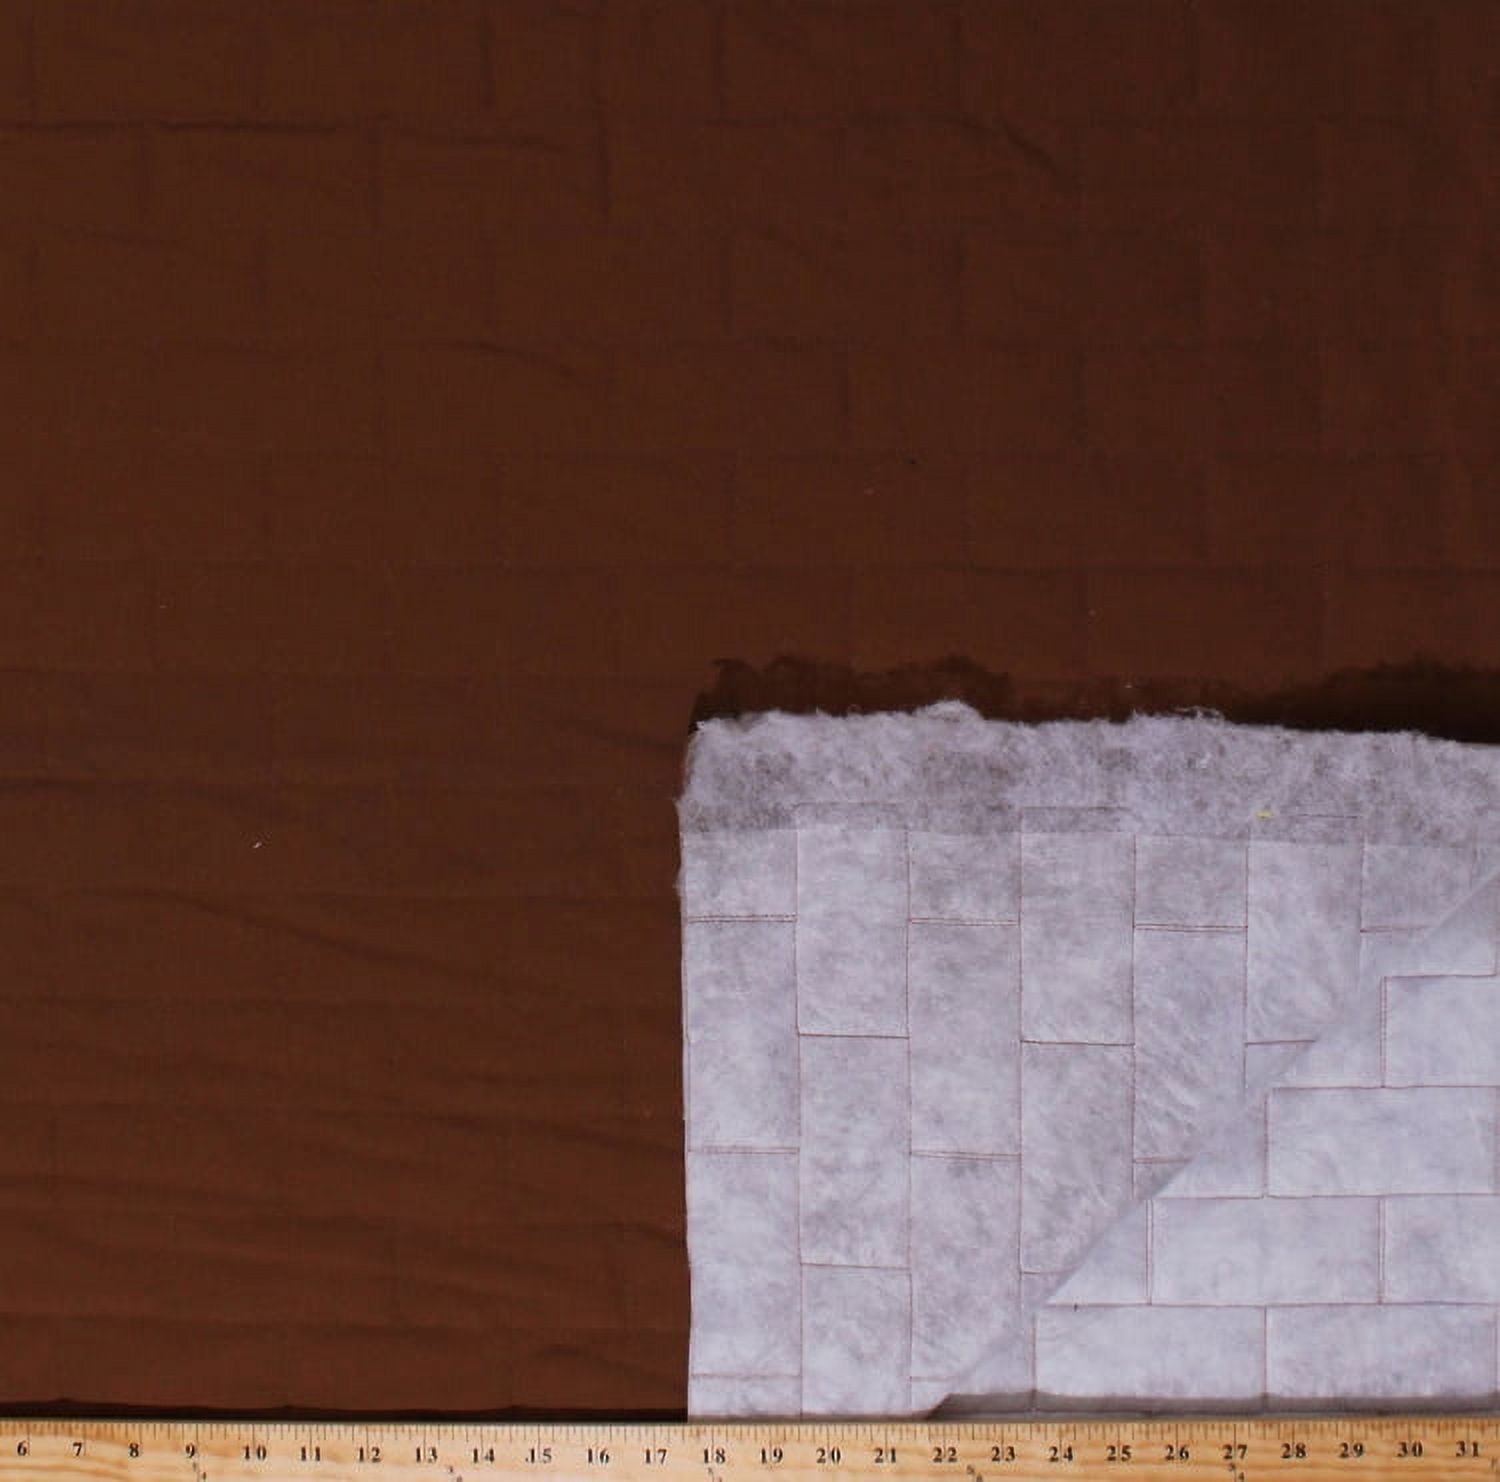 AK Trading 63 inch Wide Unprimed Cotton Canvas Fabric 10oz Natural Duck Cloth, x 1 Yard